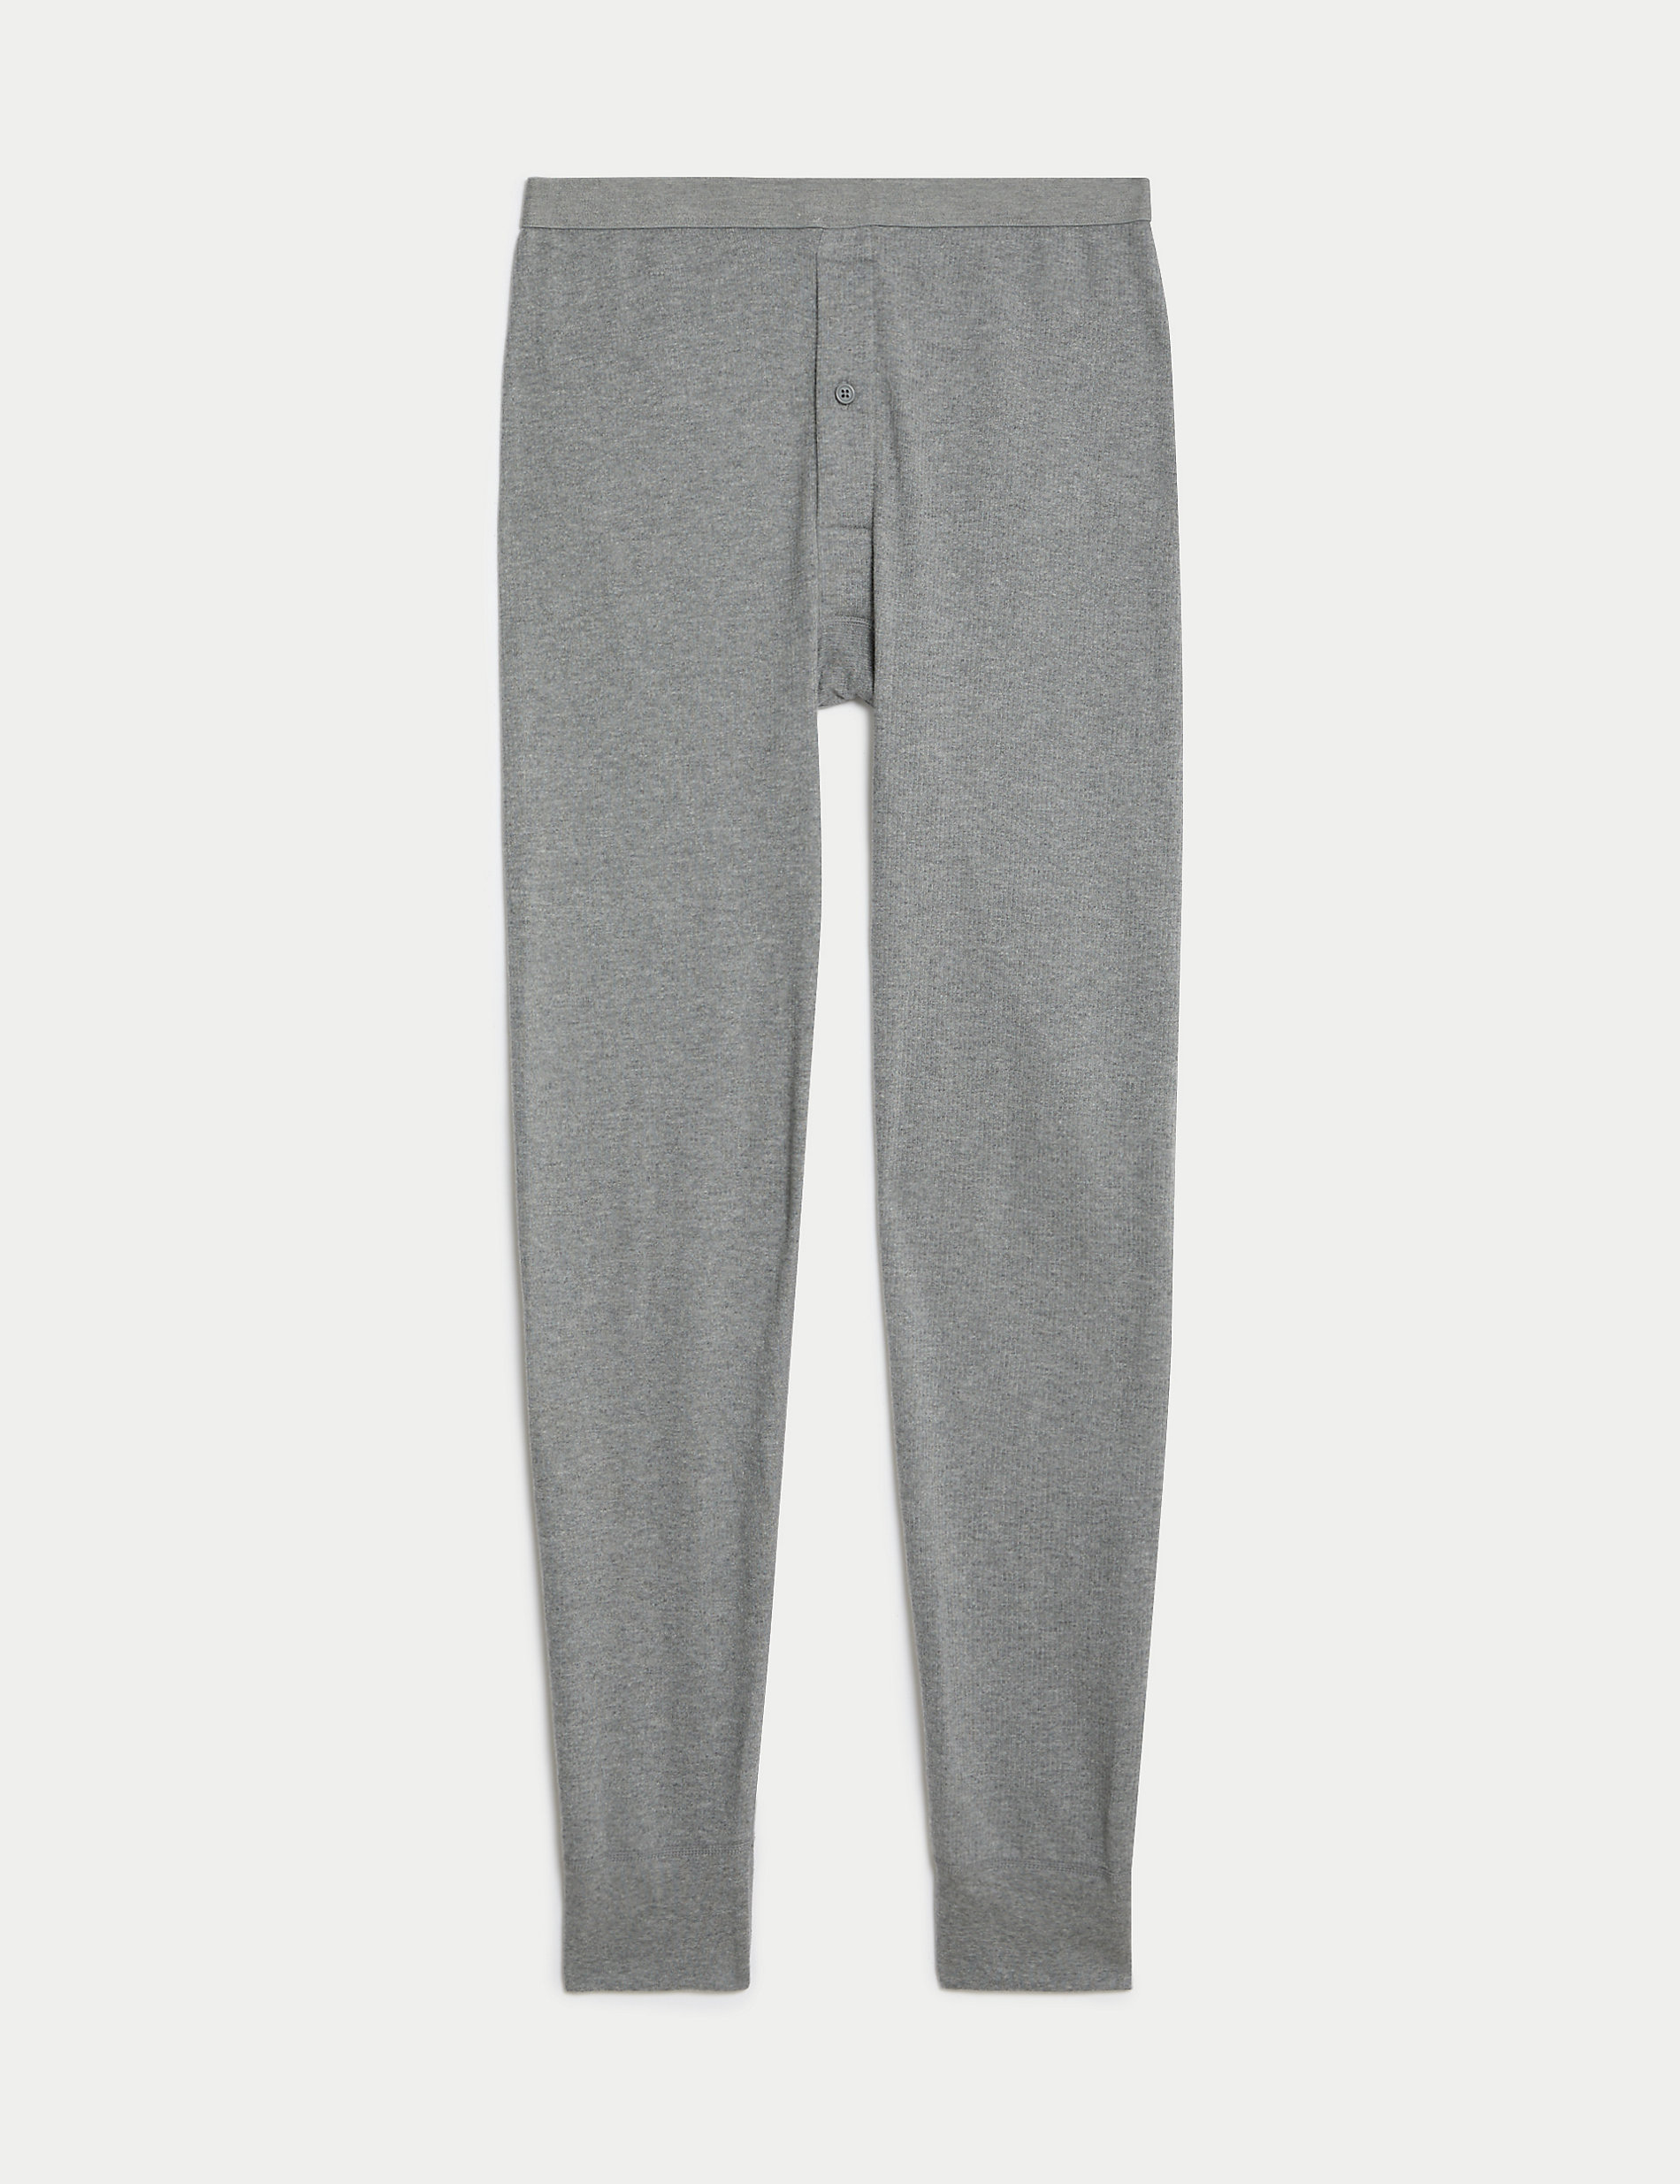 NEW Mens M&S Maximum Warmth Thermal Long Pant Black Size XL RRP £22.50 